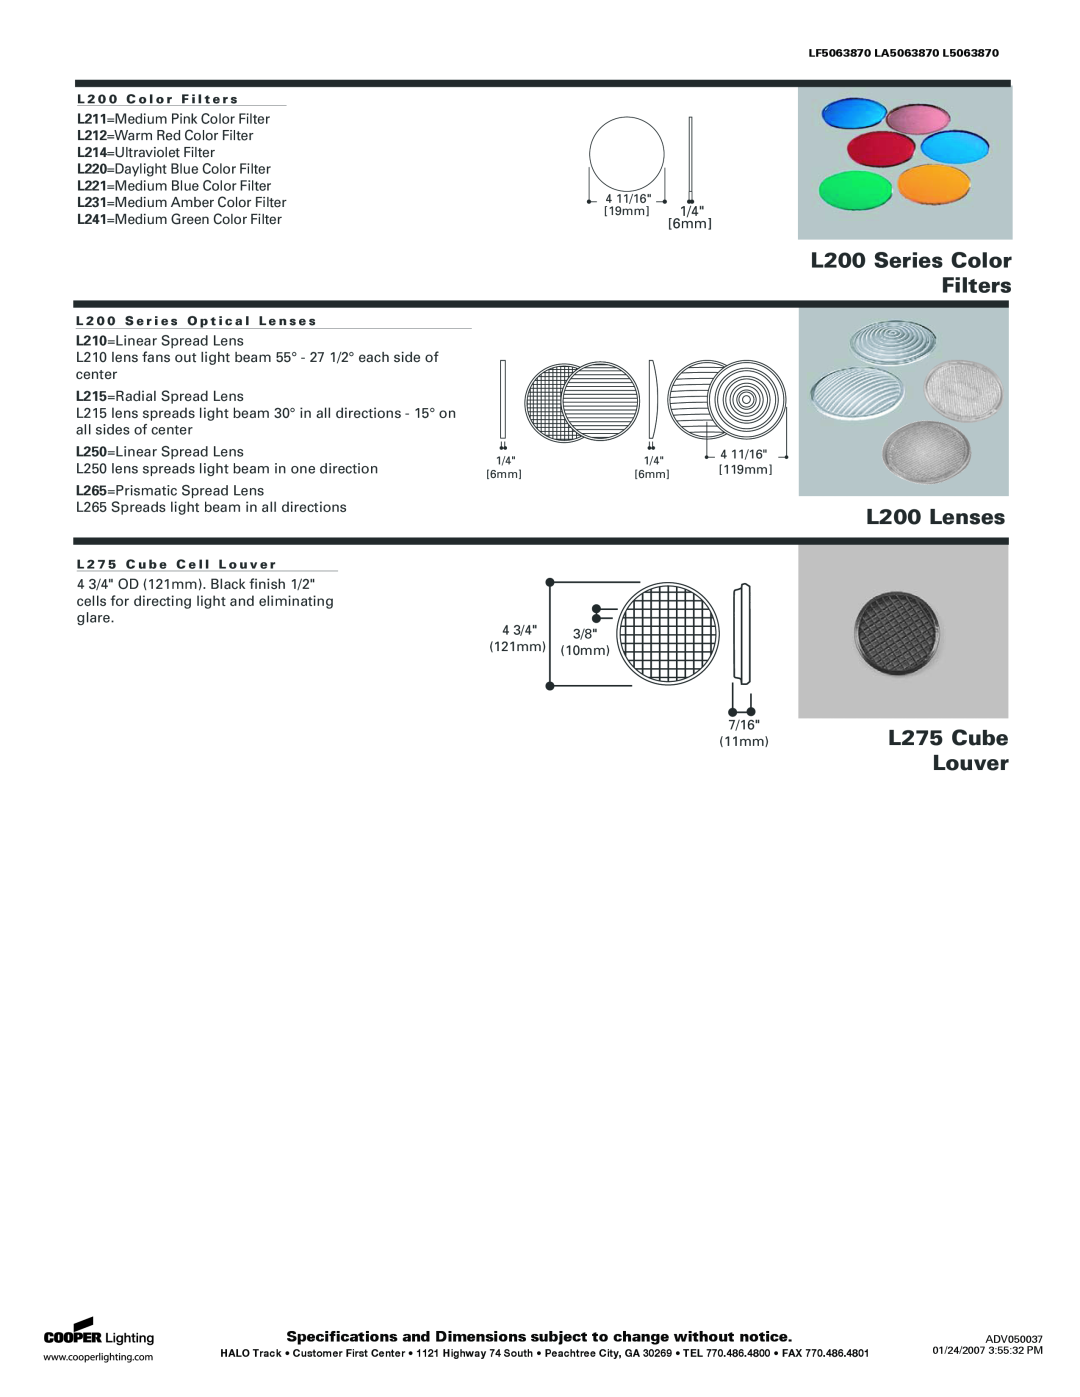 Cooper Lighting L5063870, LF5063870, LA5063870 specifications L200 Series Color Filters, L200 Lenses, L275 Cube Louver 